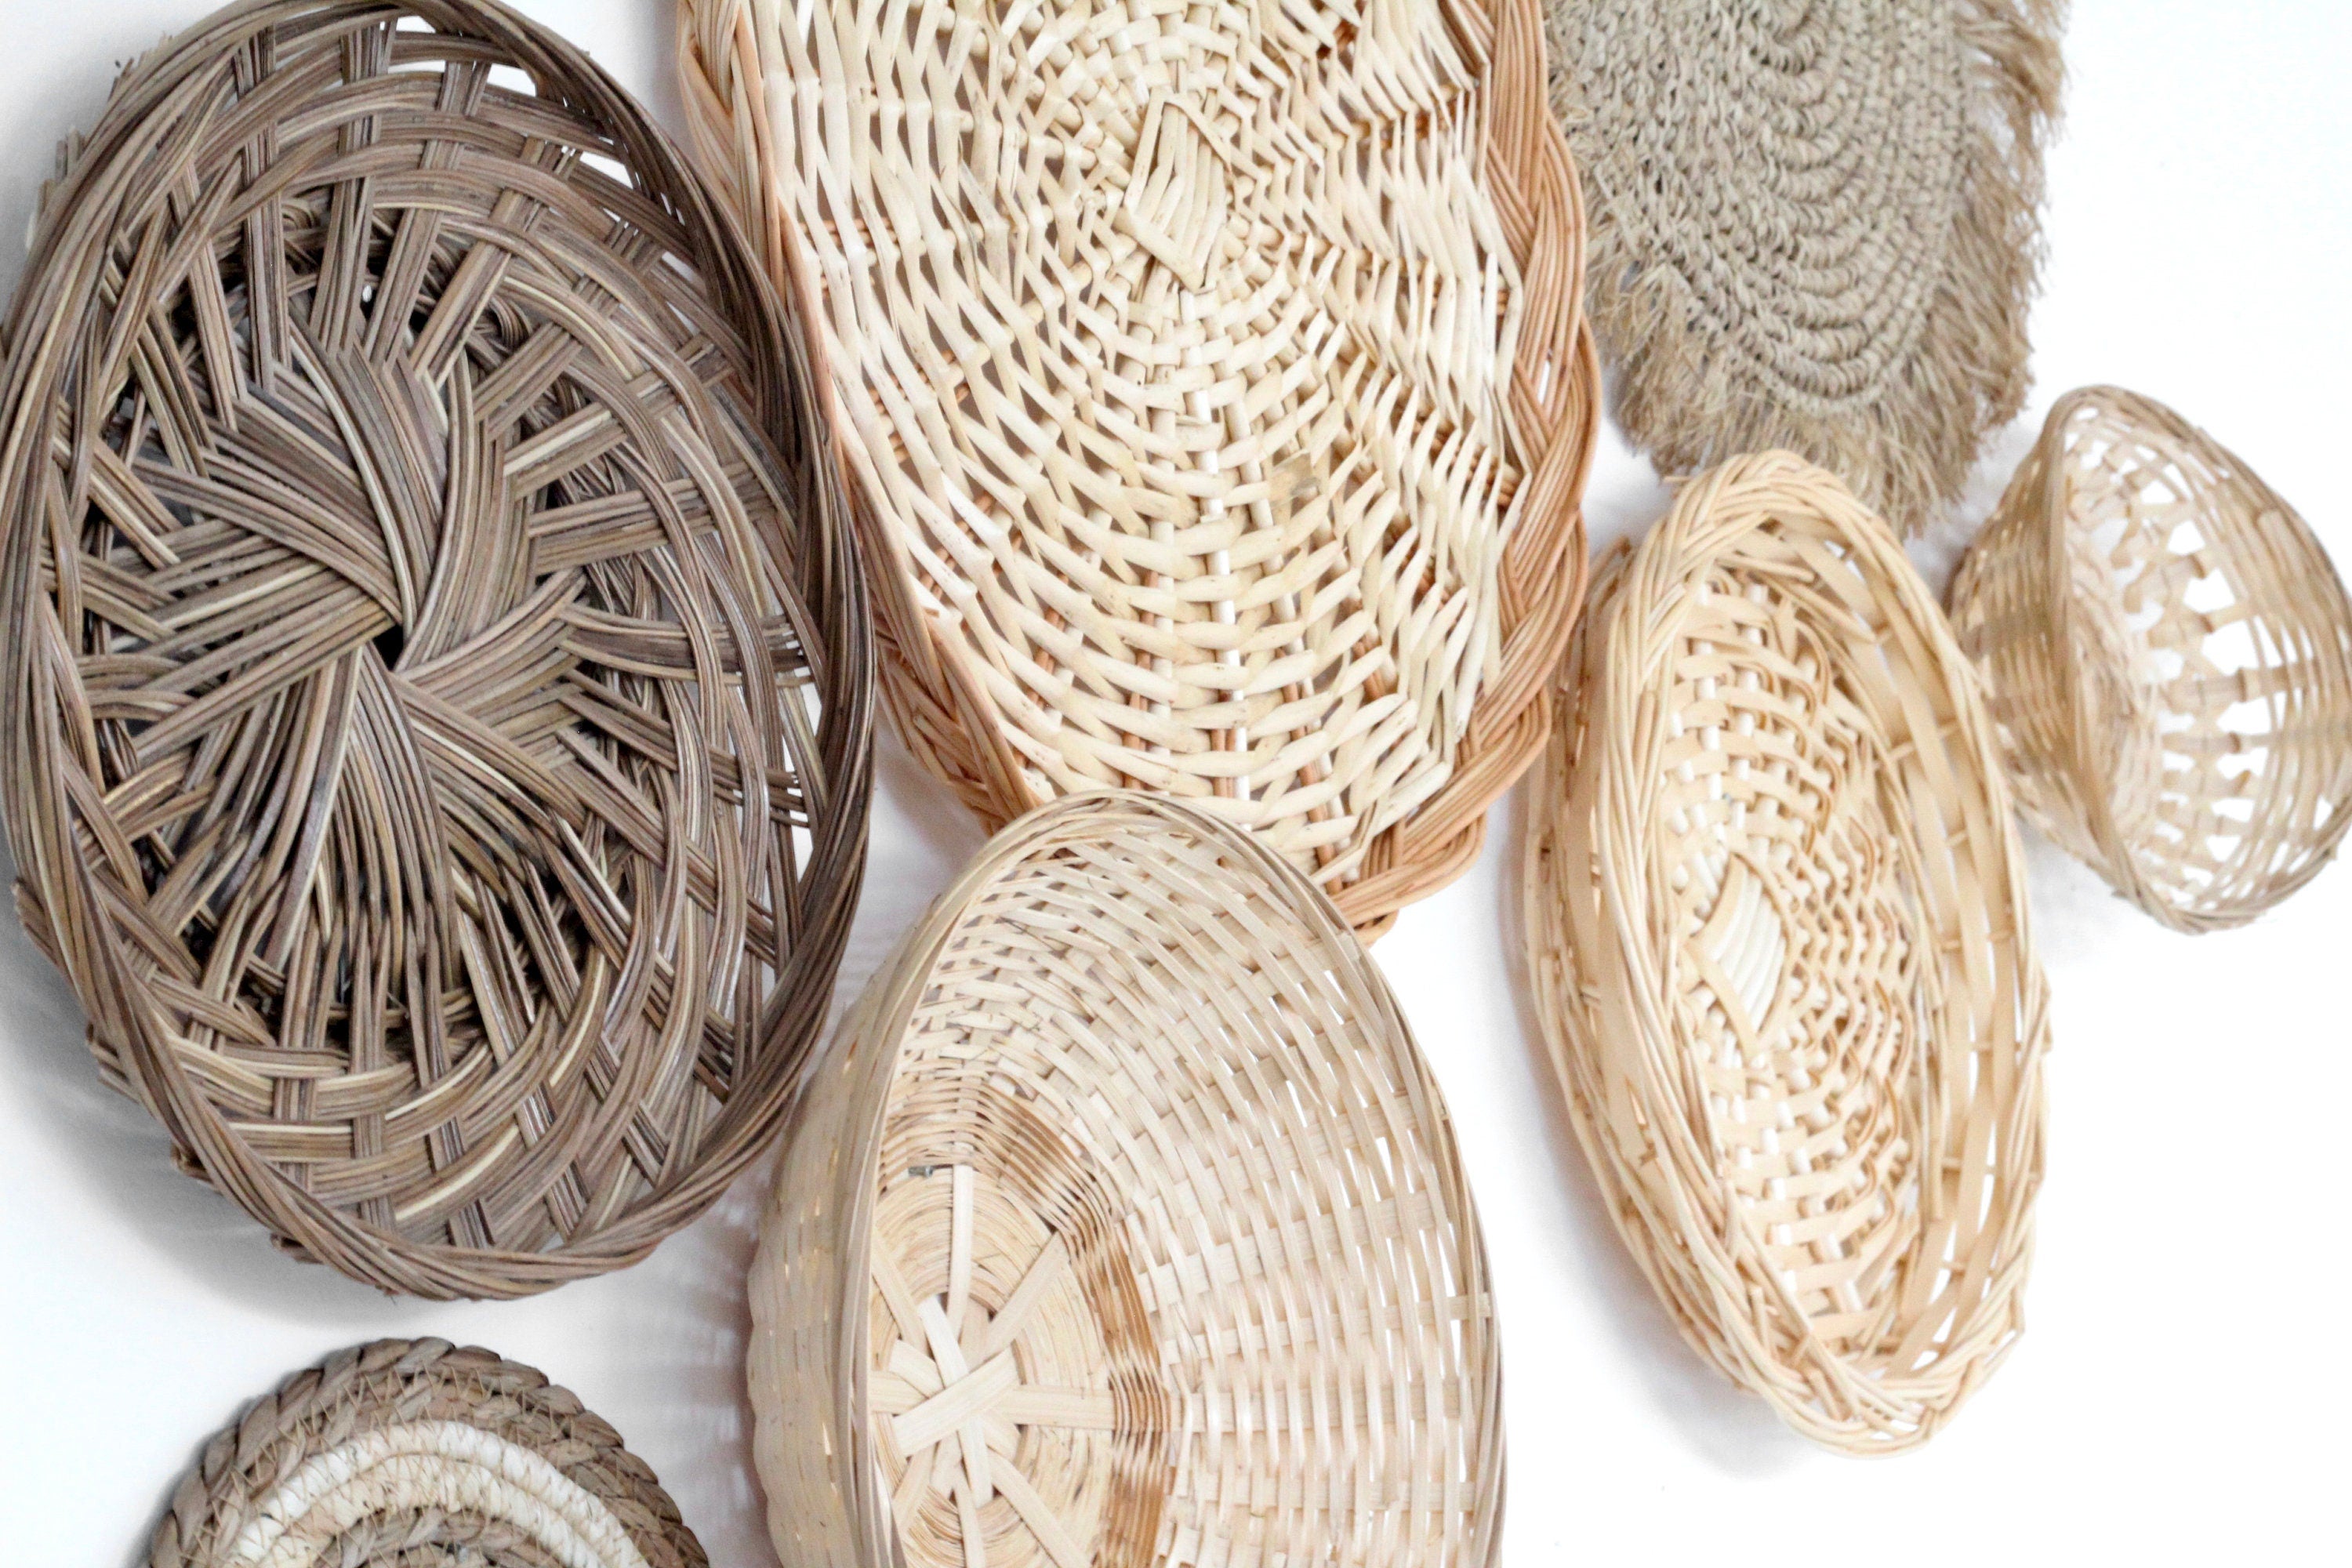 Boho Desert Mix Curated Wall Baskets Variety Set